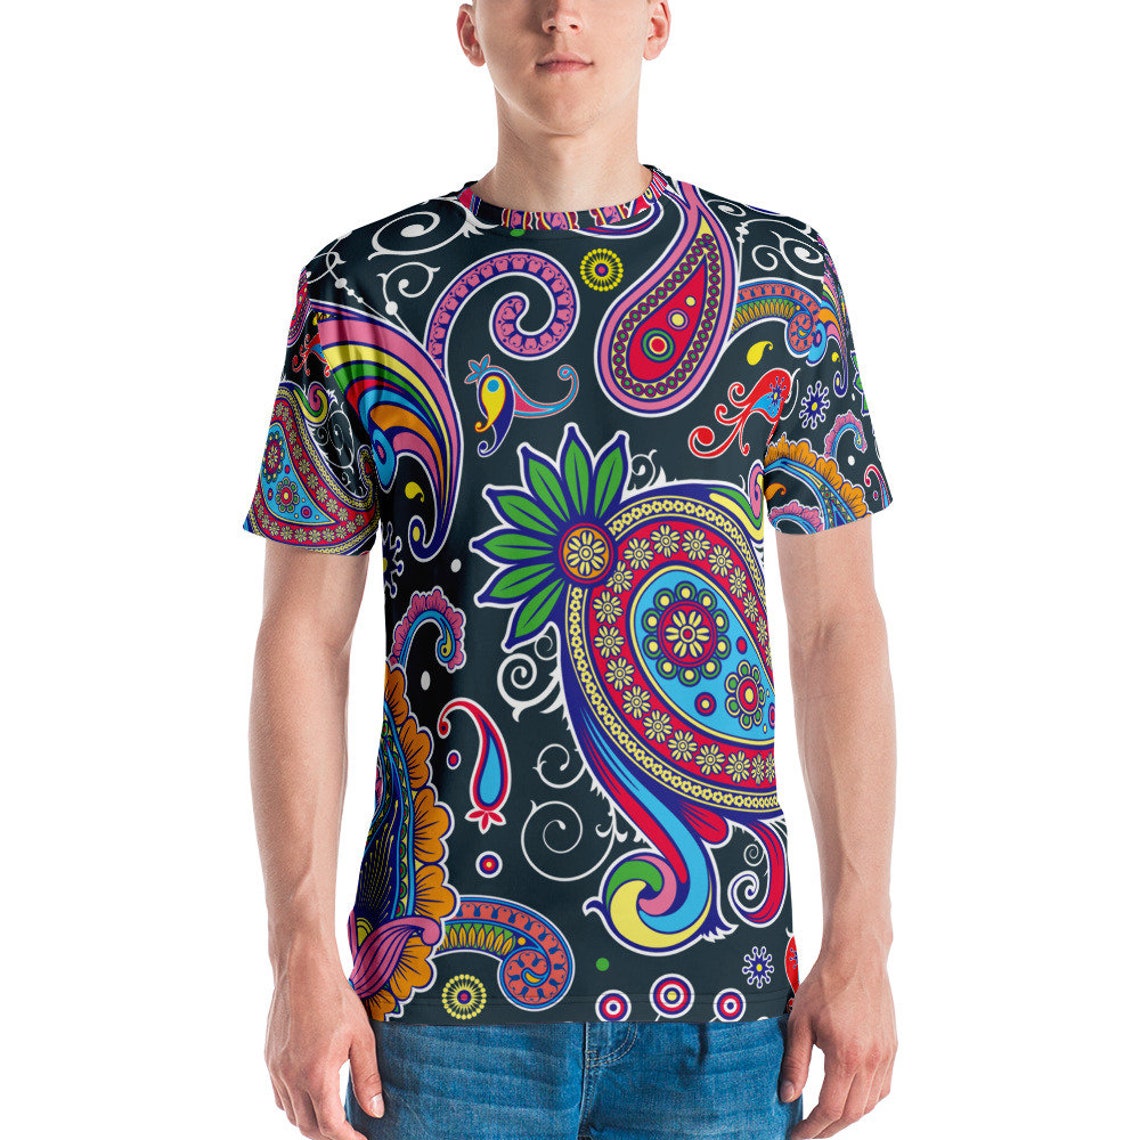 Vintage Mandala Music Festival shirt Cool Hippie shirt | Etsy